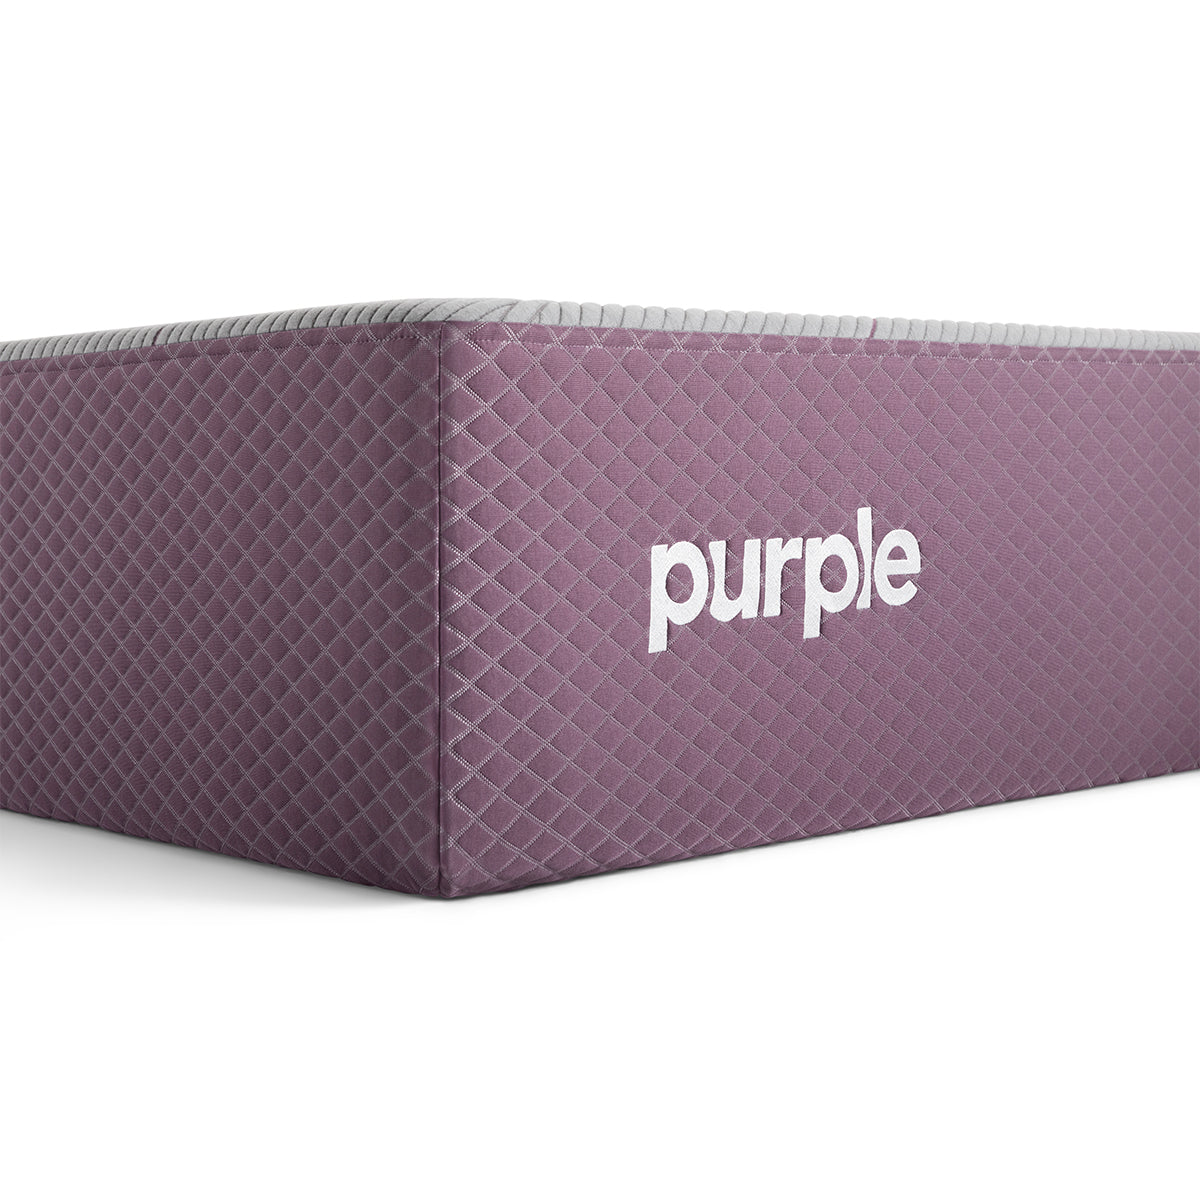 Purple Restore Plus Soft Mattress corner detail